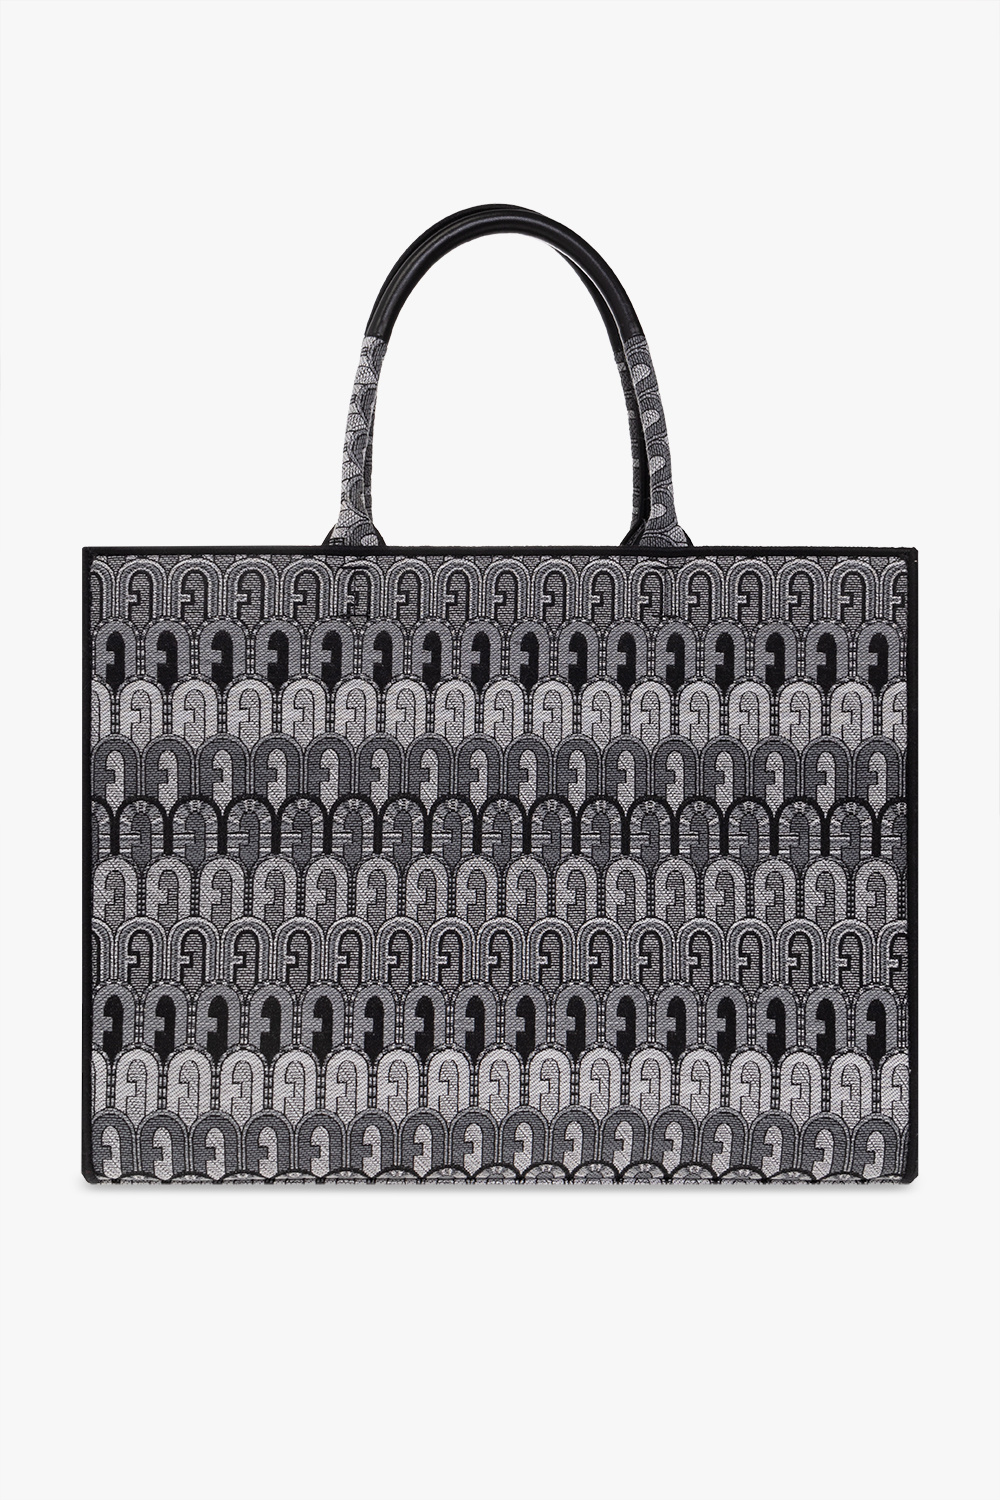 Christian Dior Boston Bag Black PVC Overall Pattern Height 30